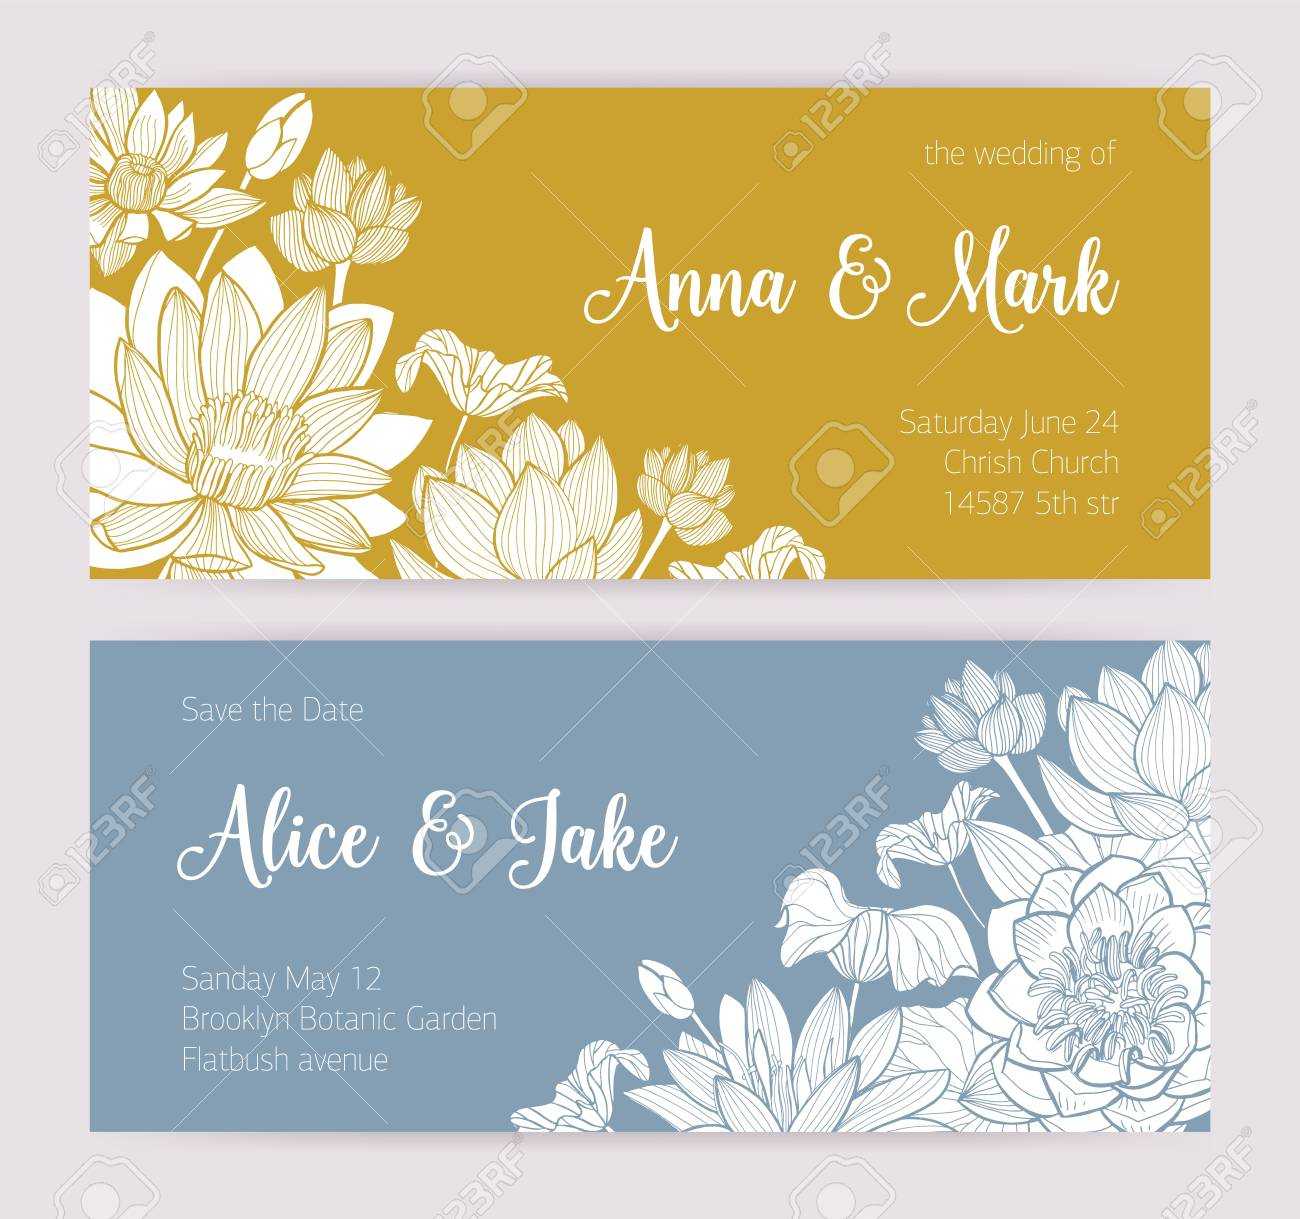 Elegant Wedding Invitation Or Save The Date Card Templates With.. For Save The Date Cards Templates